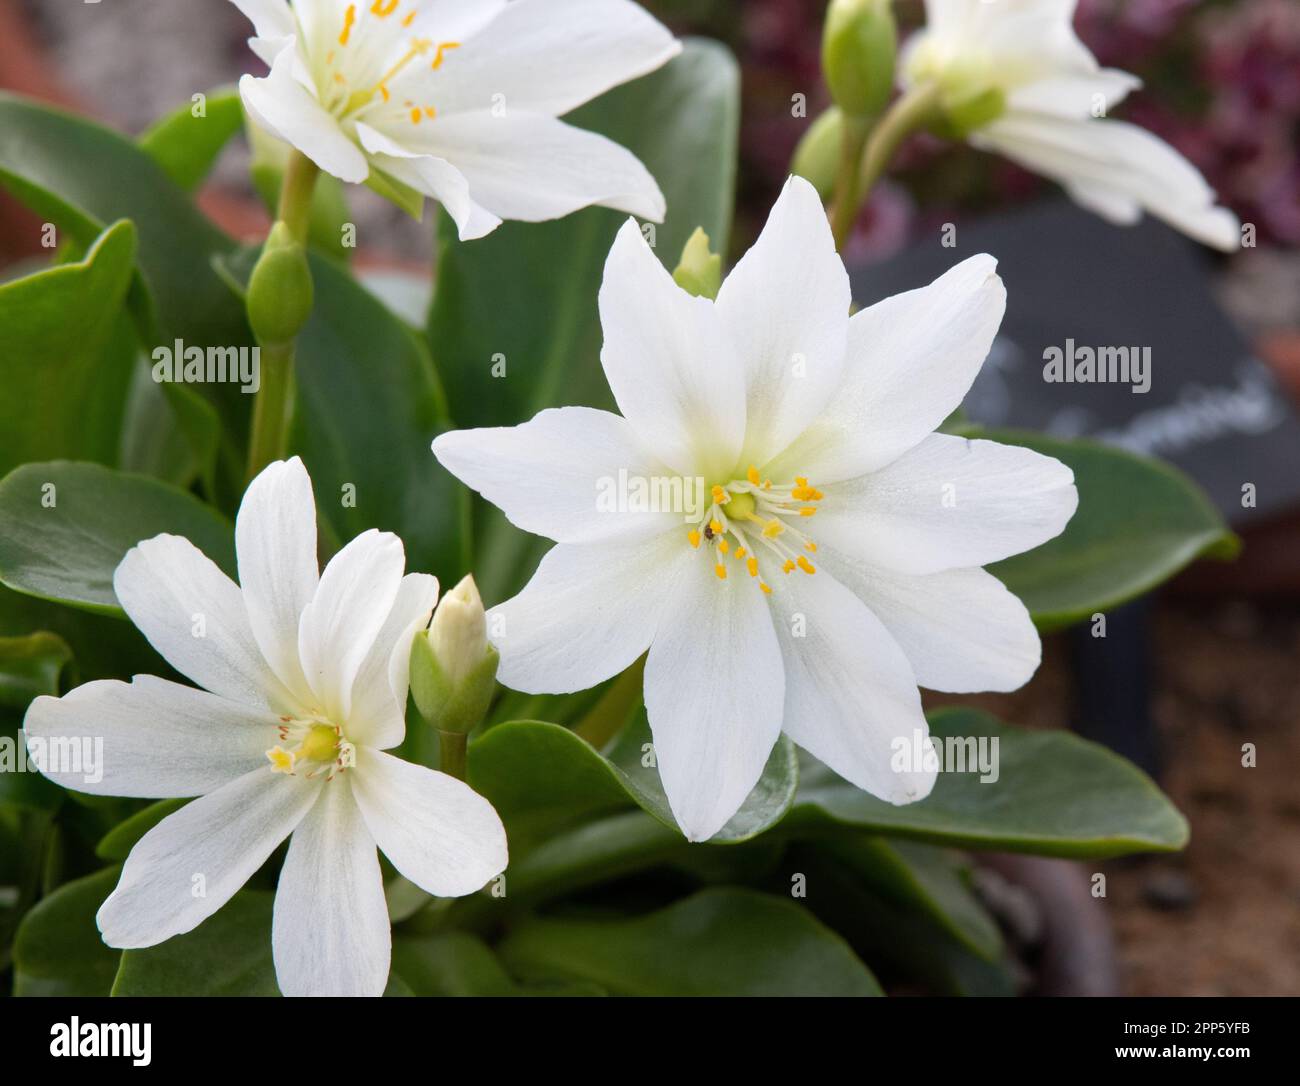 Lewisia tweedyi 'Alba' Stock Photo - Alamy